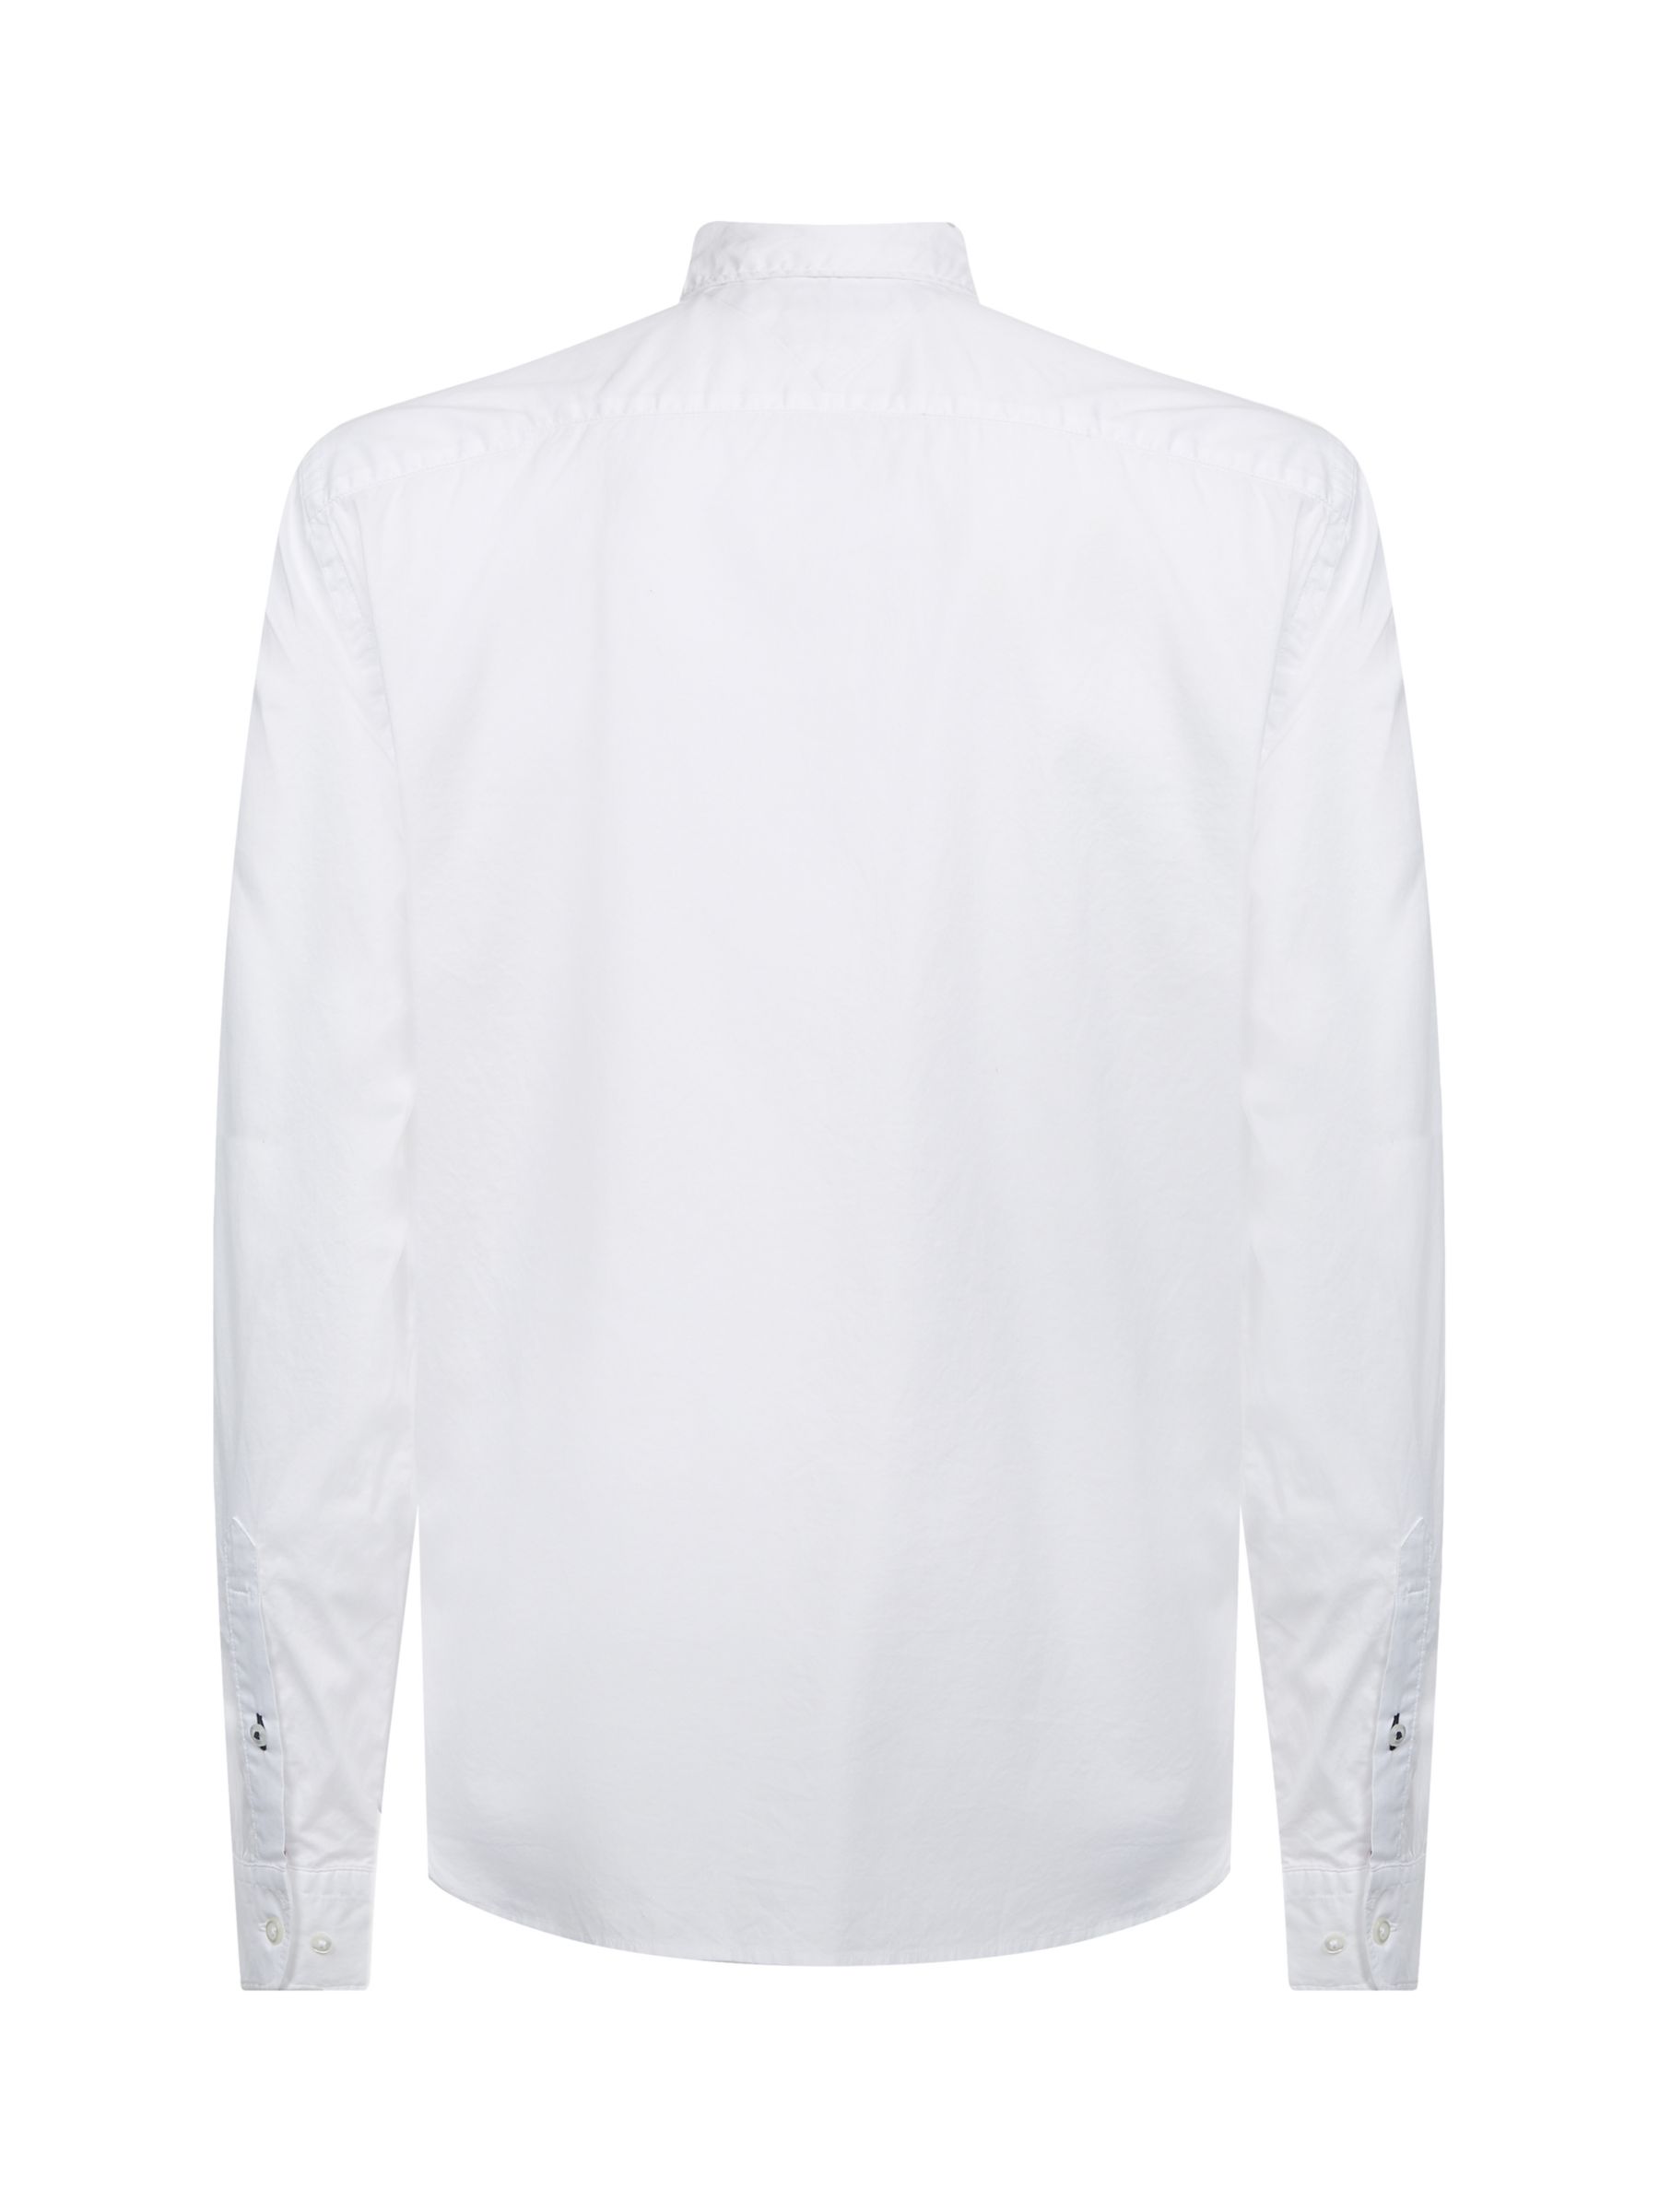 Tommy Hilfiger Poplin Shirt, White, XS